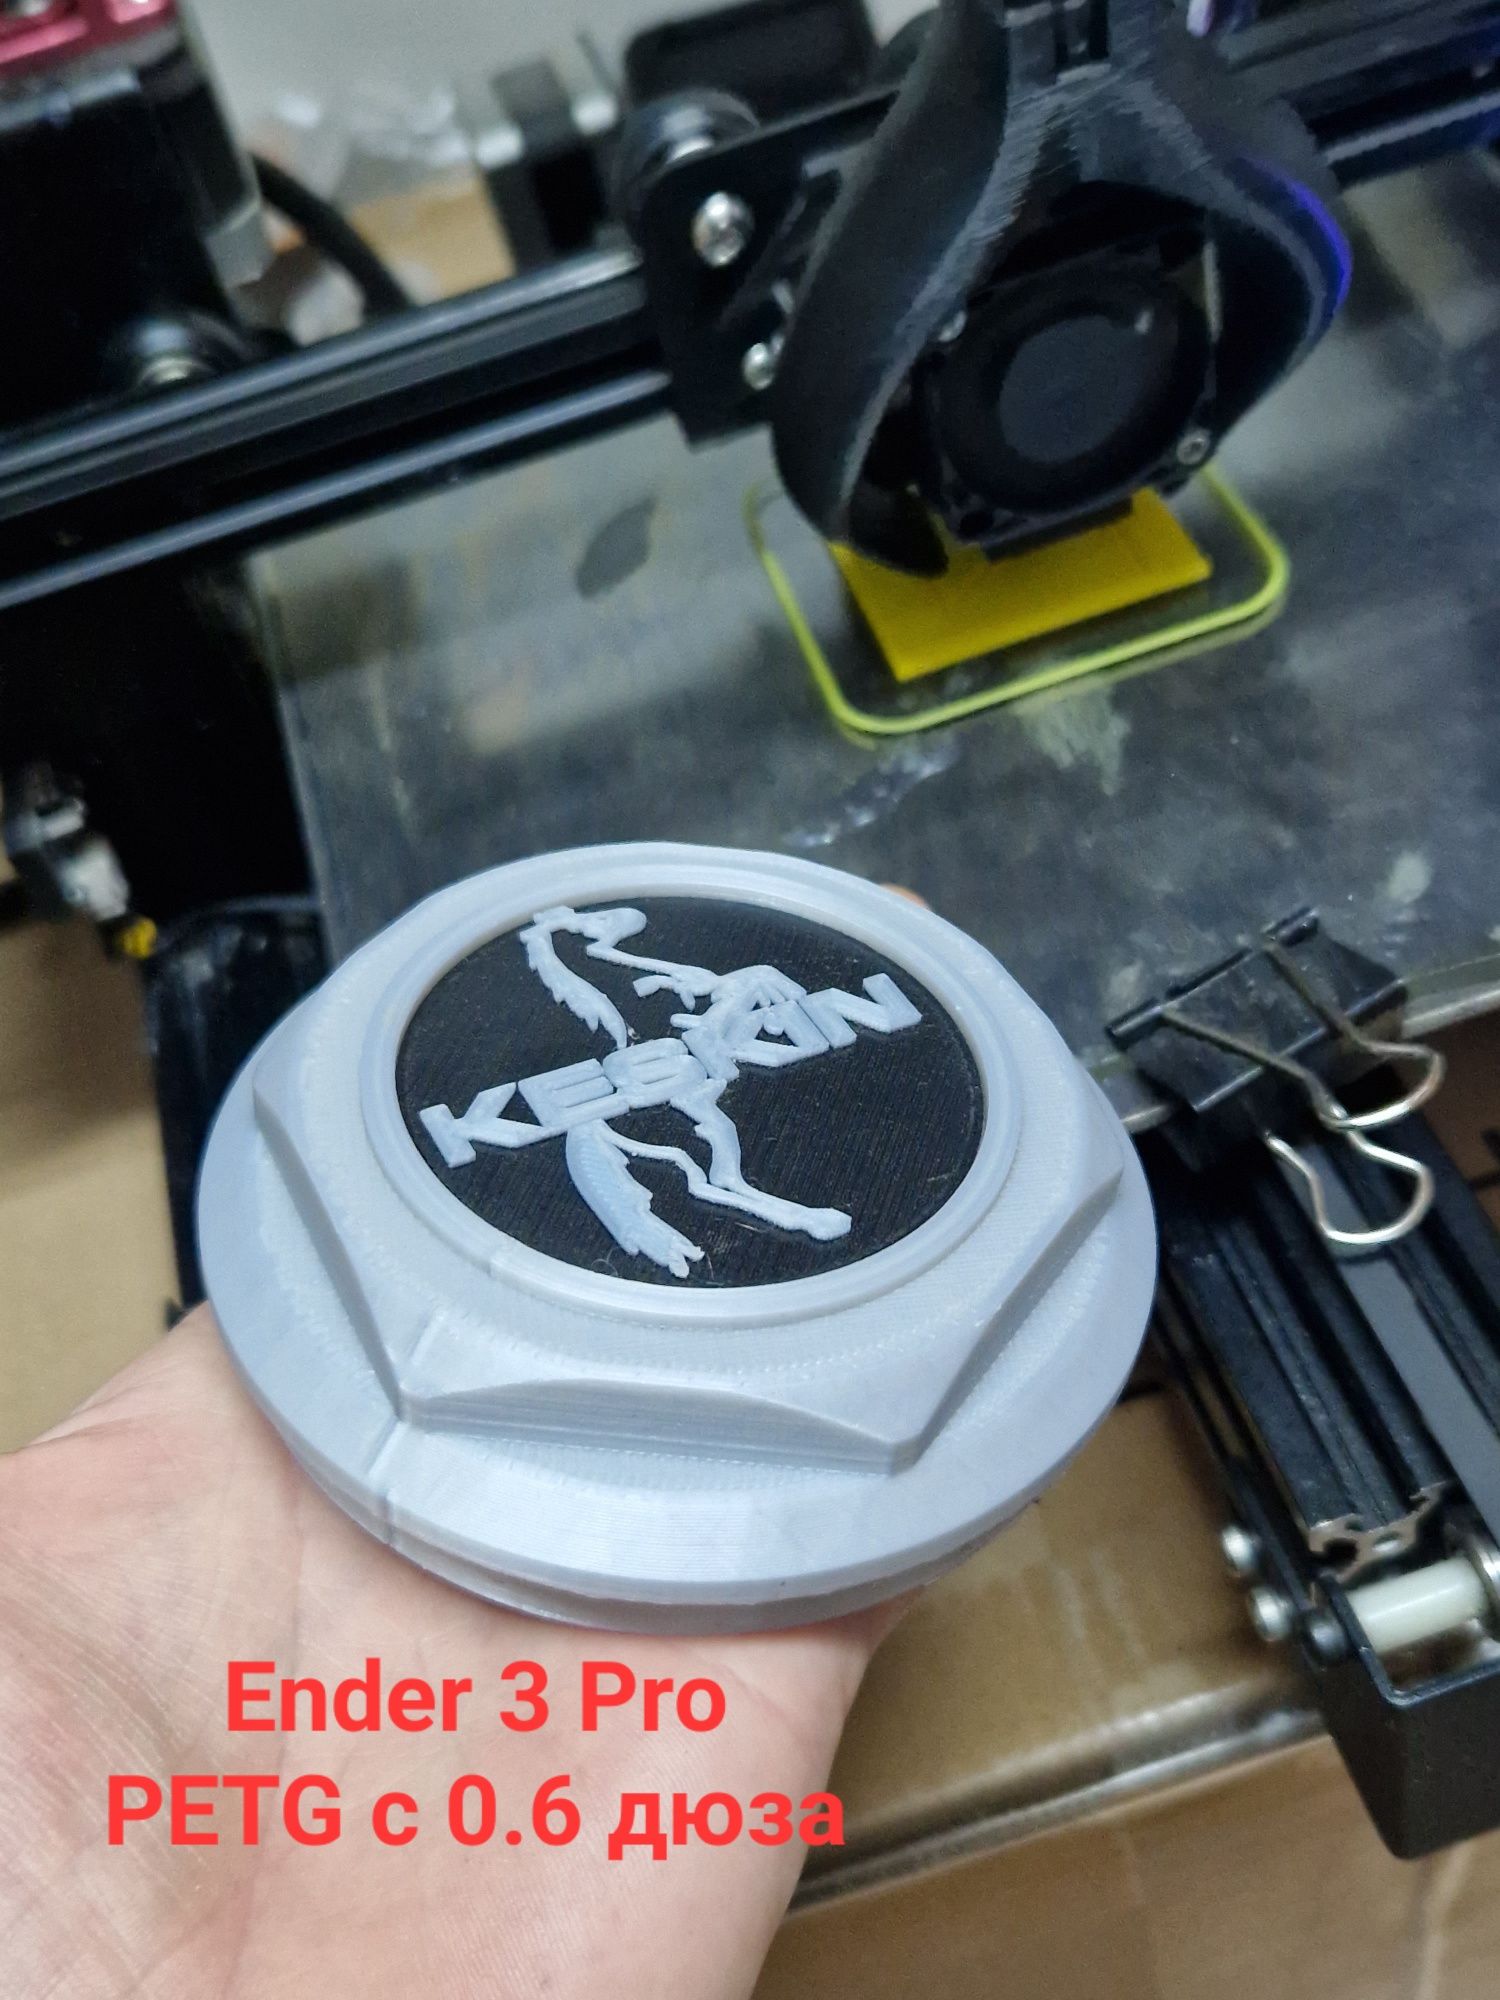 Ender 3 Pro с много части и аксесоари / 3Д принтер Ендер 3 Про